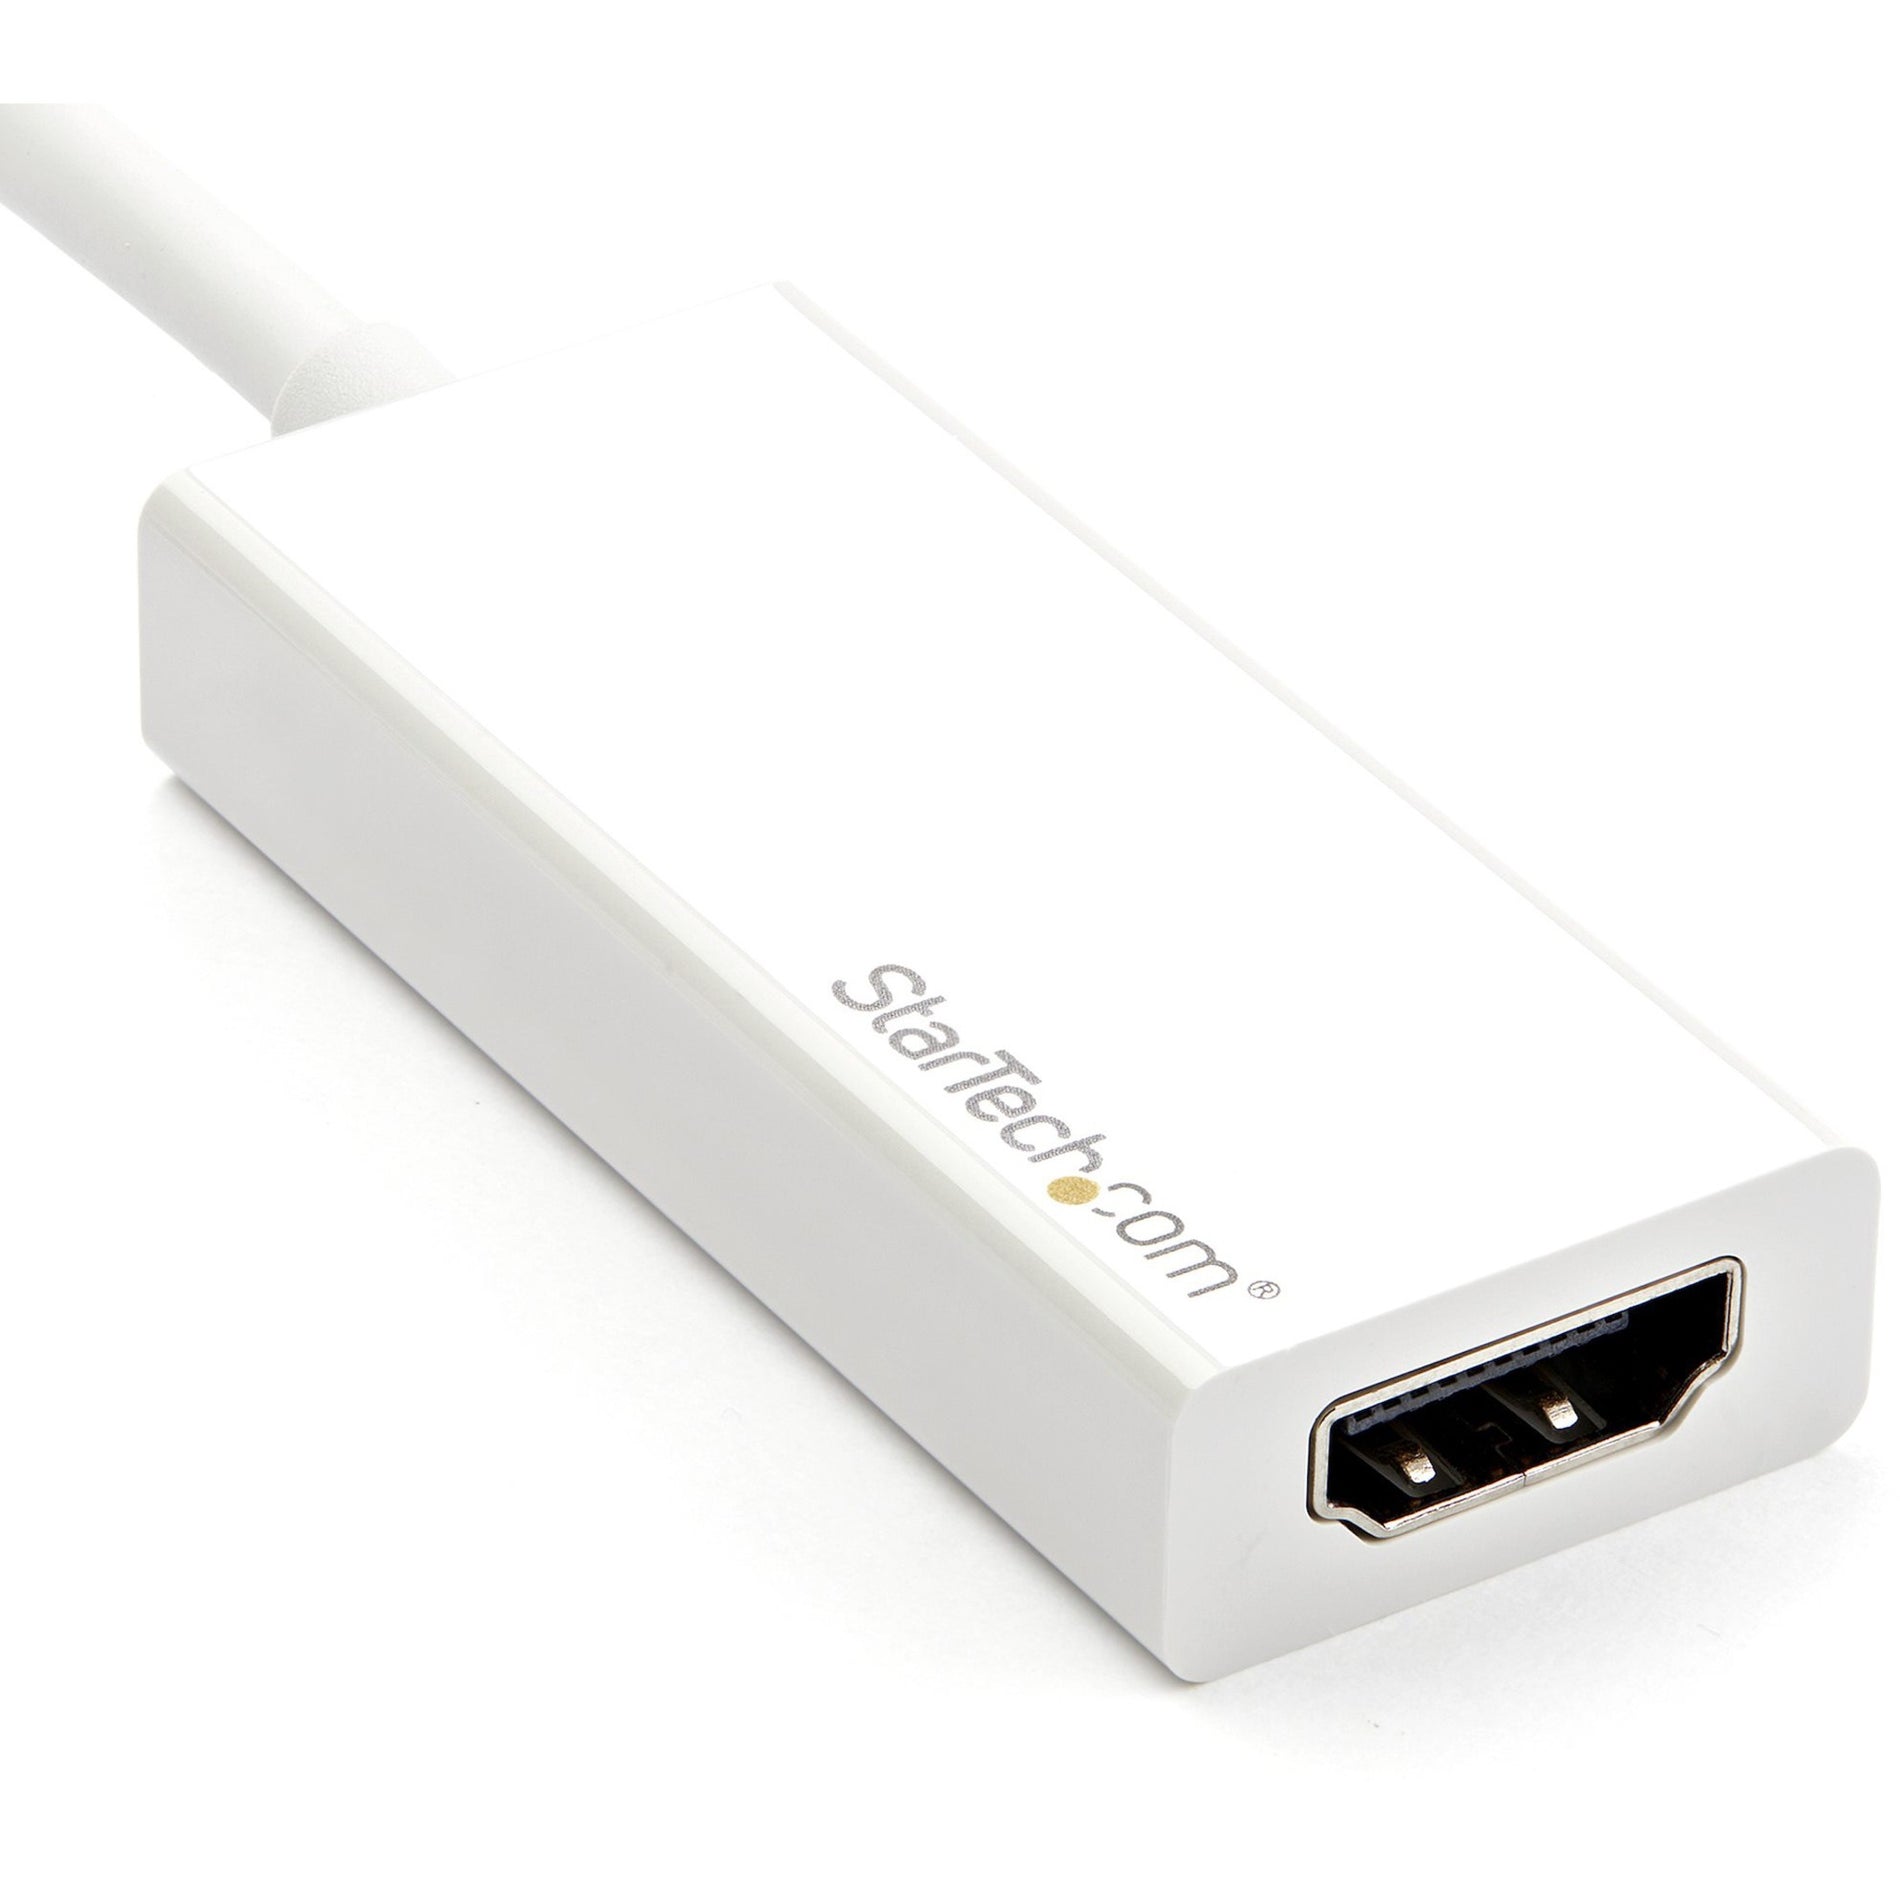 StarTech.com CDP2HD4K60W USB-C to HDMI Adapter - USB Type-C to HDMI Converter, White - 4K 60Hz